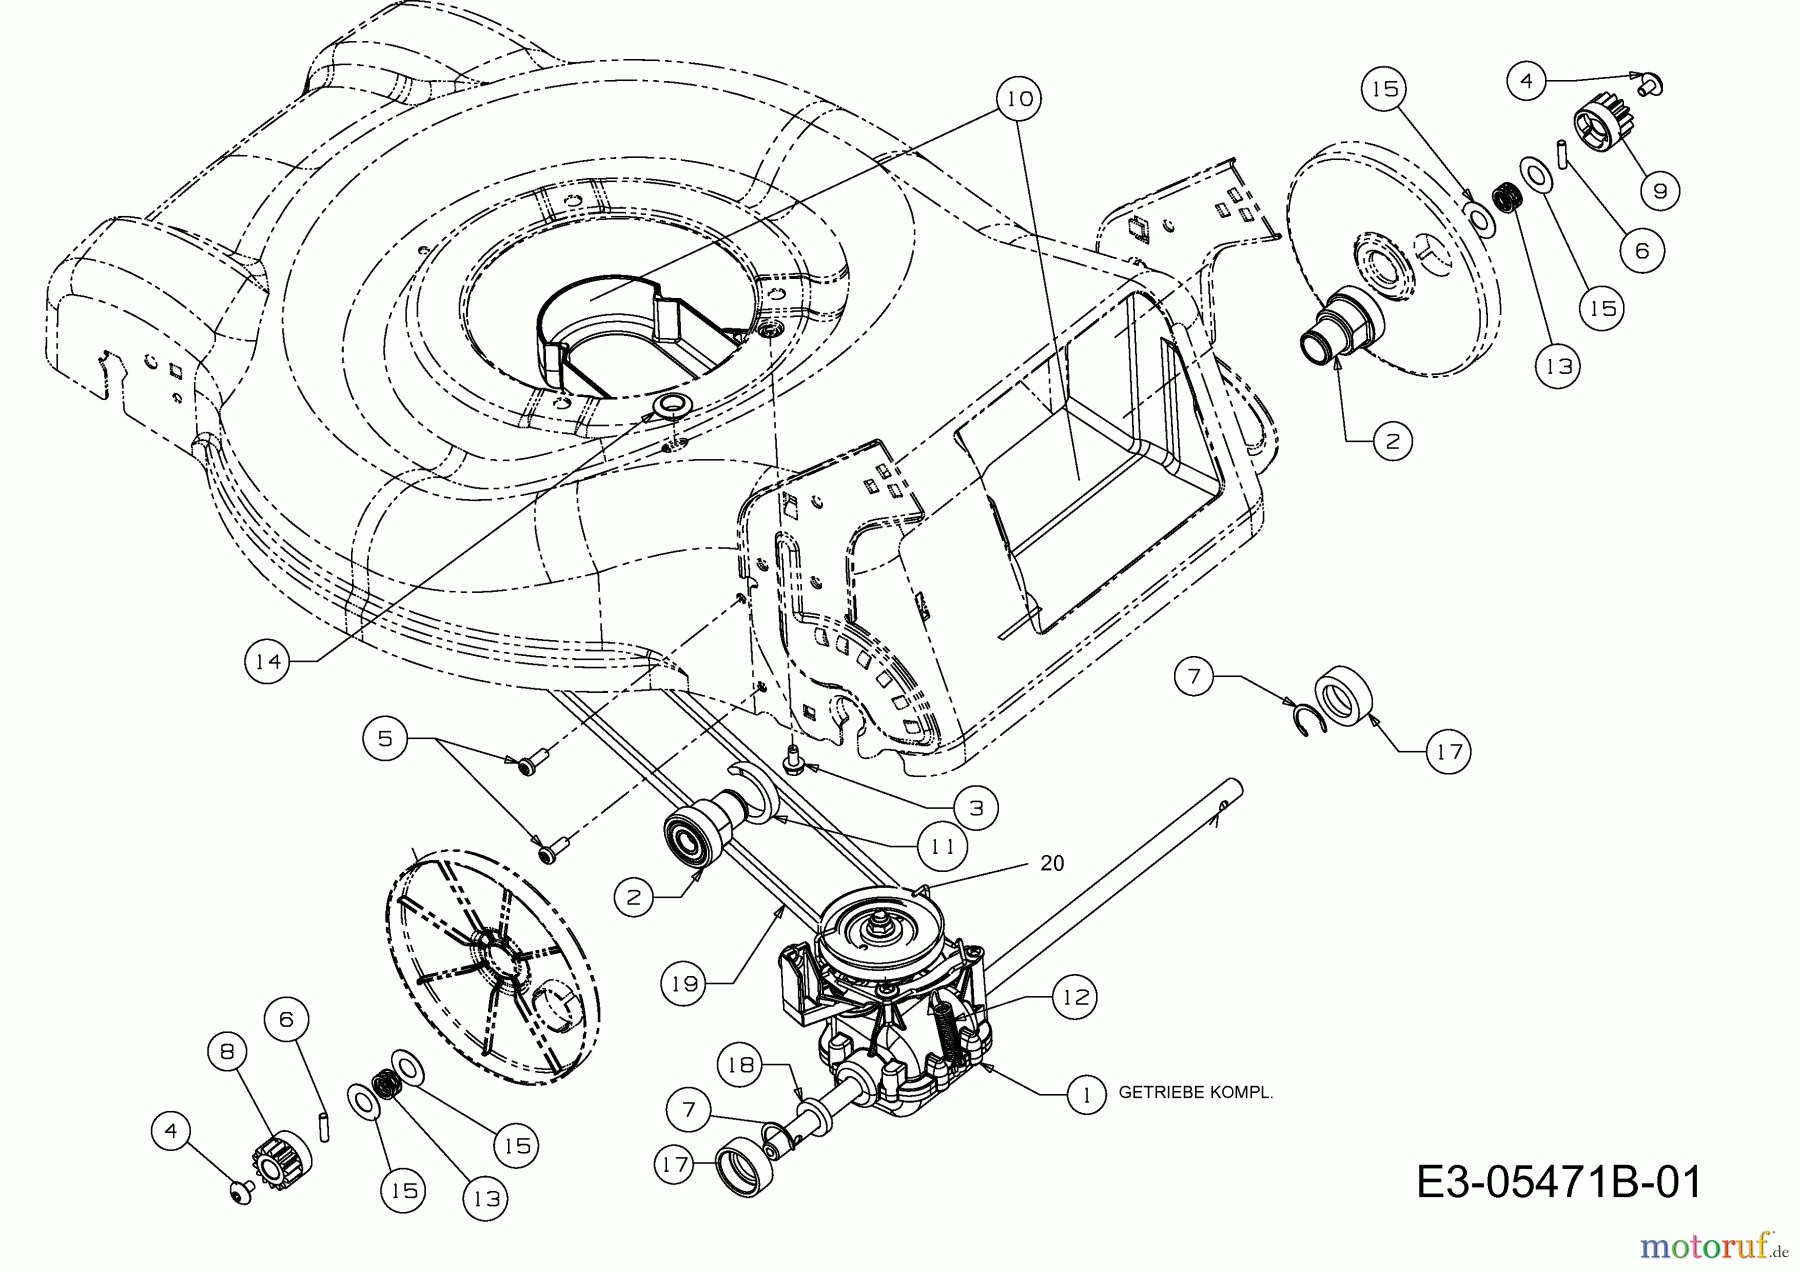  MTD Motormäher mit Antrieb 46 BS 12A-J75B600  (2015) Getriebe, Keilriemen